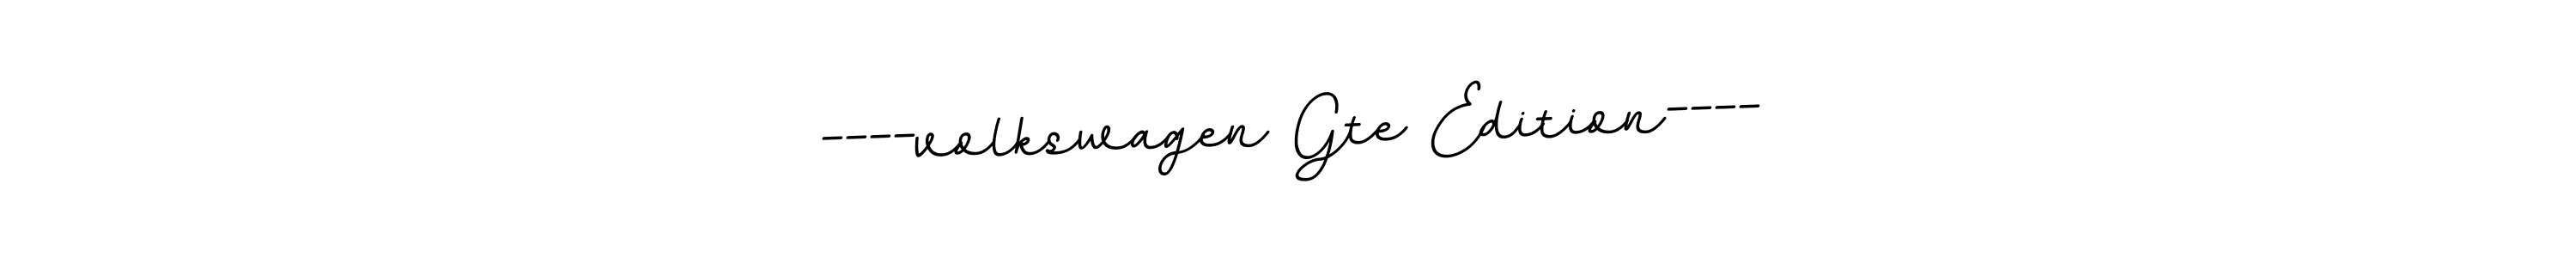 ----volkswagen Gte Edition---- stylish signature style. Best Handwritten Sign (BallpointsItalic-DORy9) for my name. Handwritten Signature Collection Ideas for my name ----volkswagen Gte Edition----. ----volkswagen Gte Edition---- signature style 11 images and pictures png